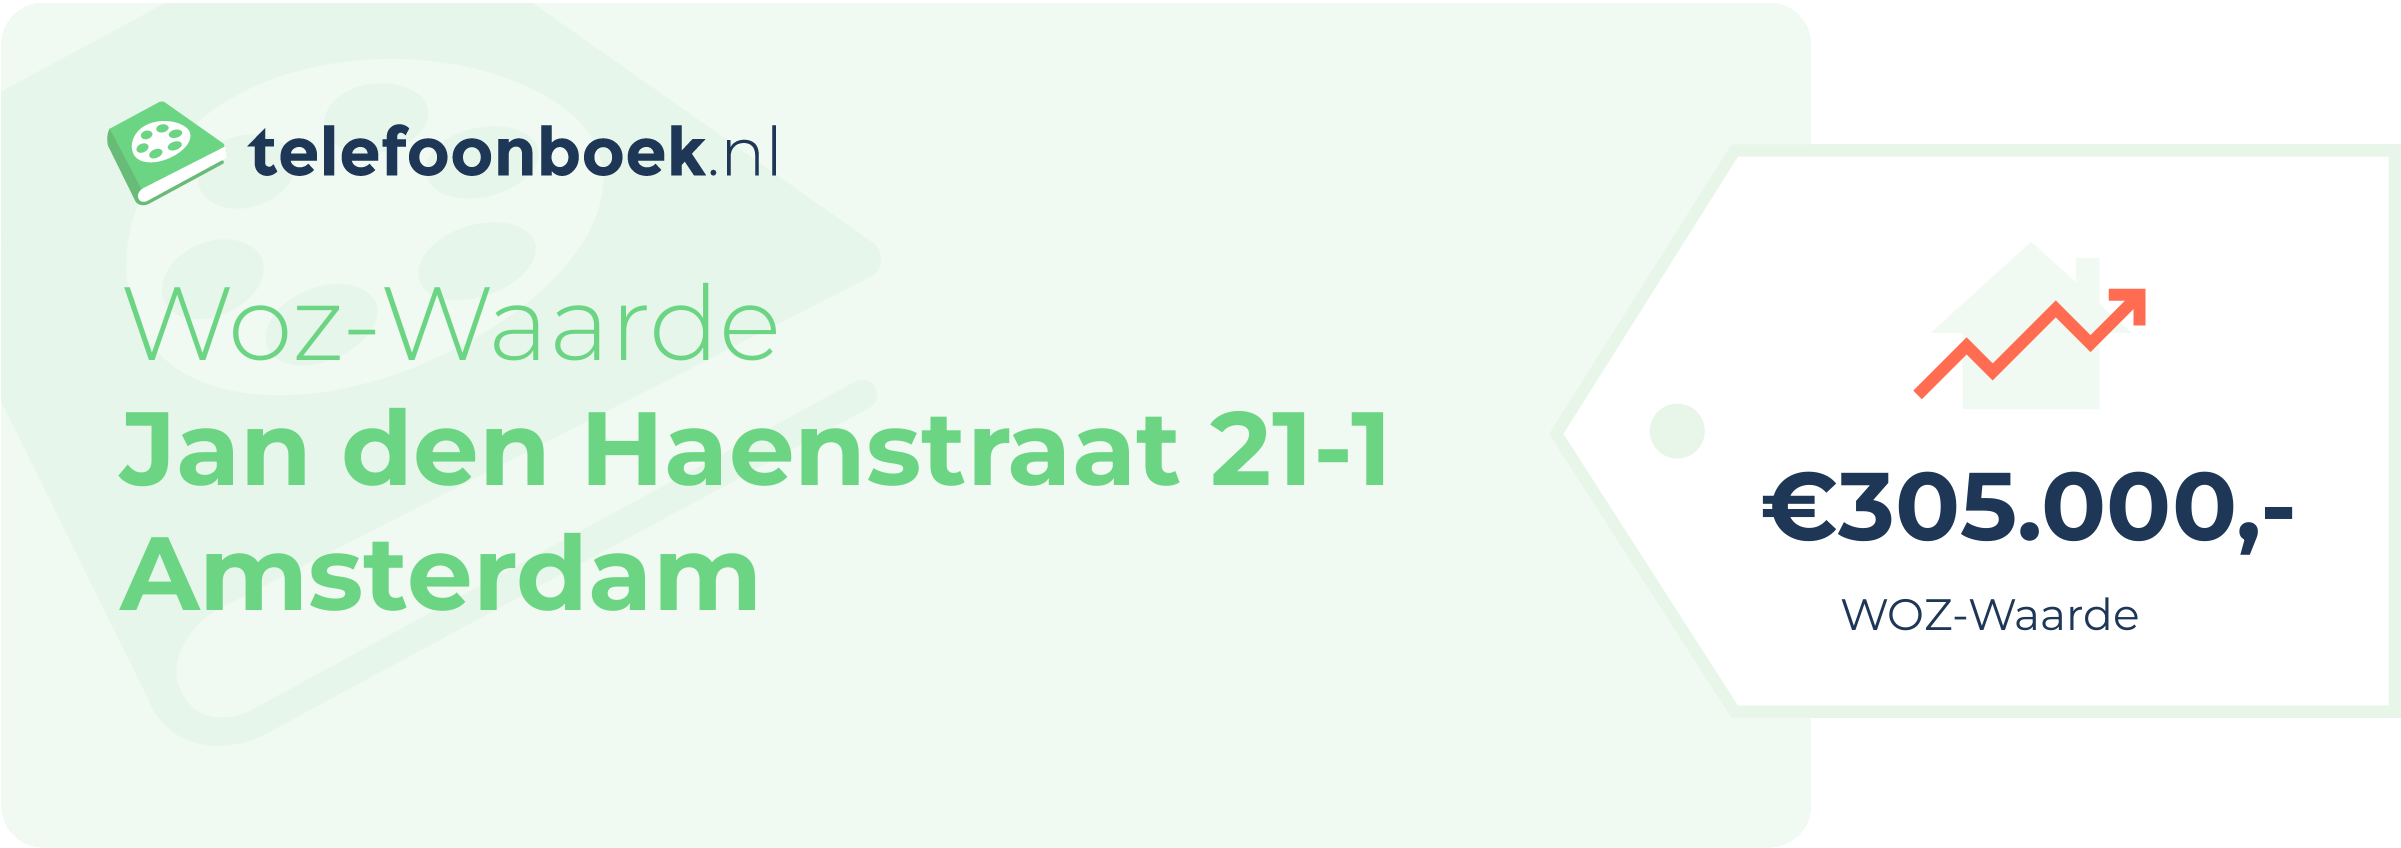 WOZ-waarde Jan Den Haenstraat 21-1 Amsterdam